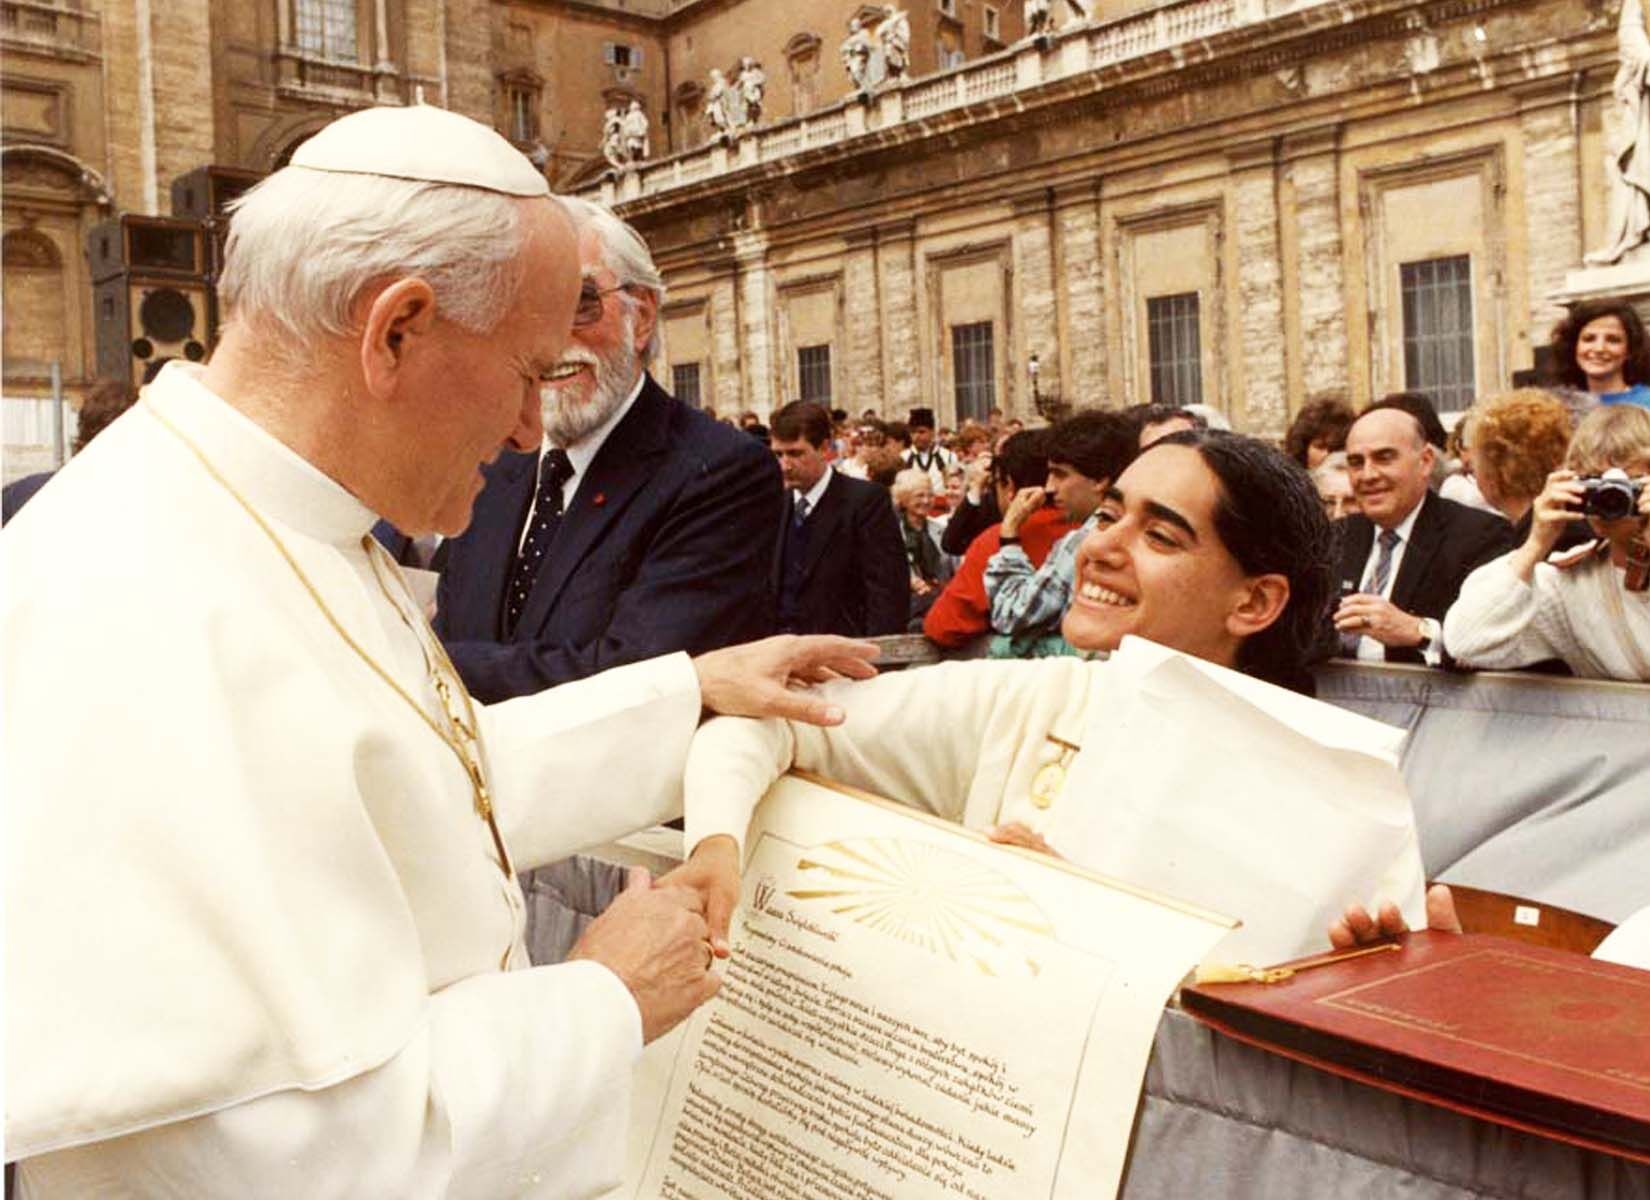 With Pope John Paul II, 1985